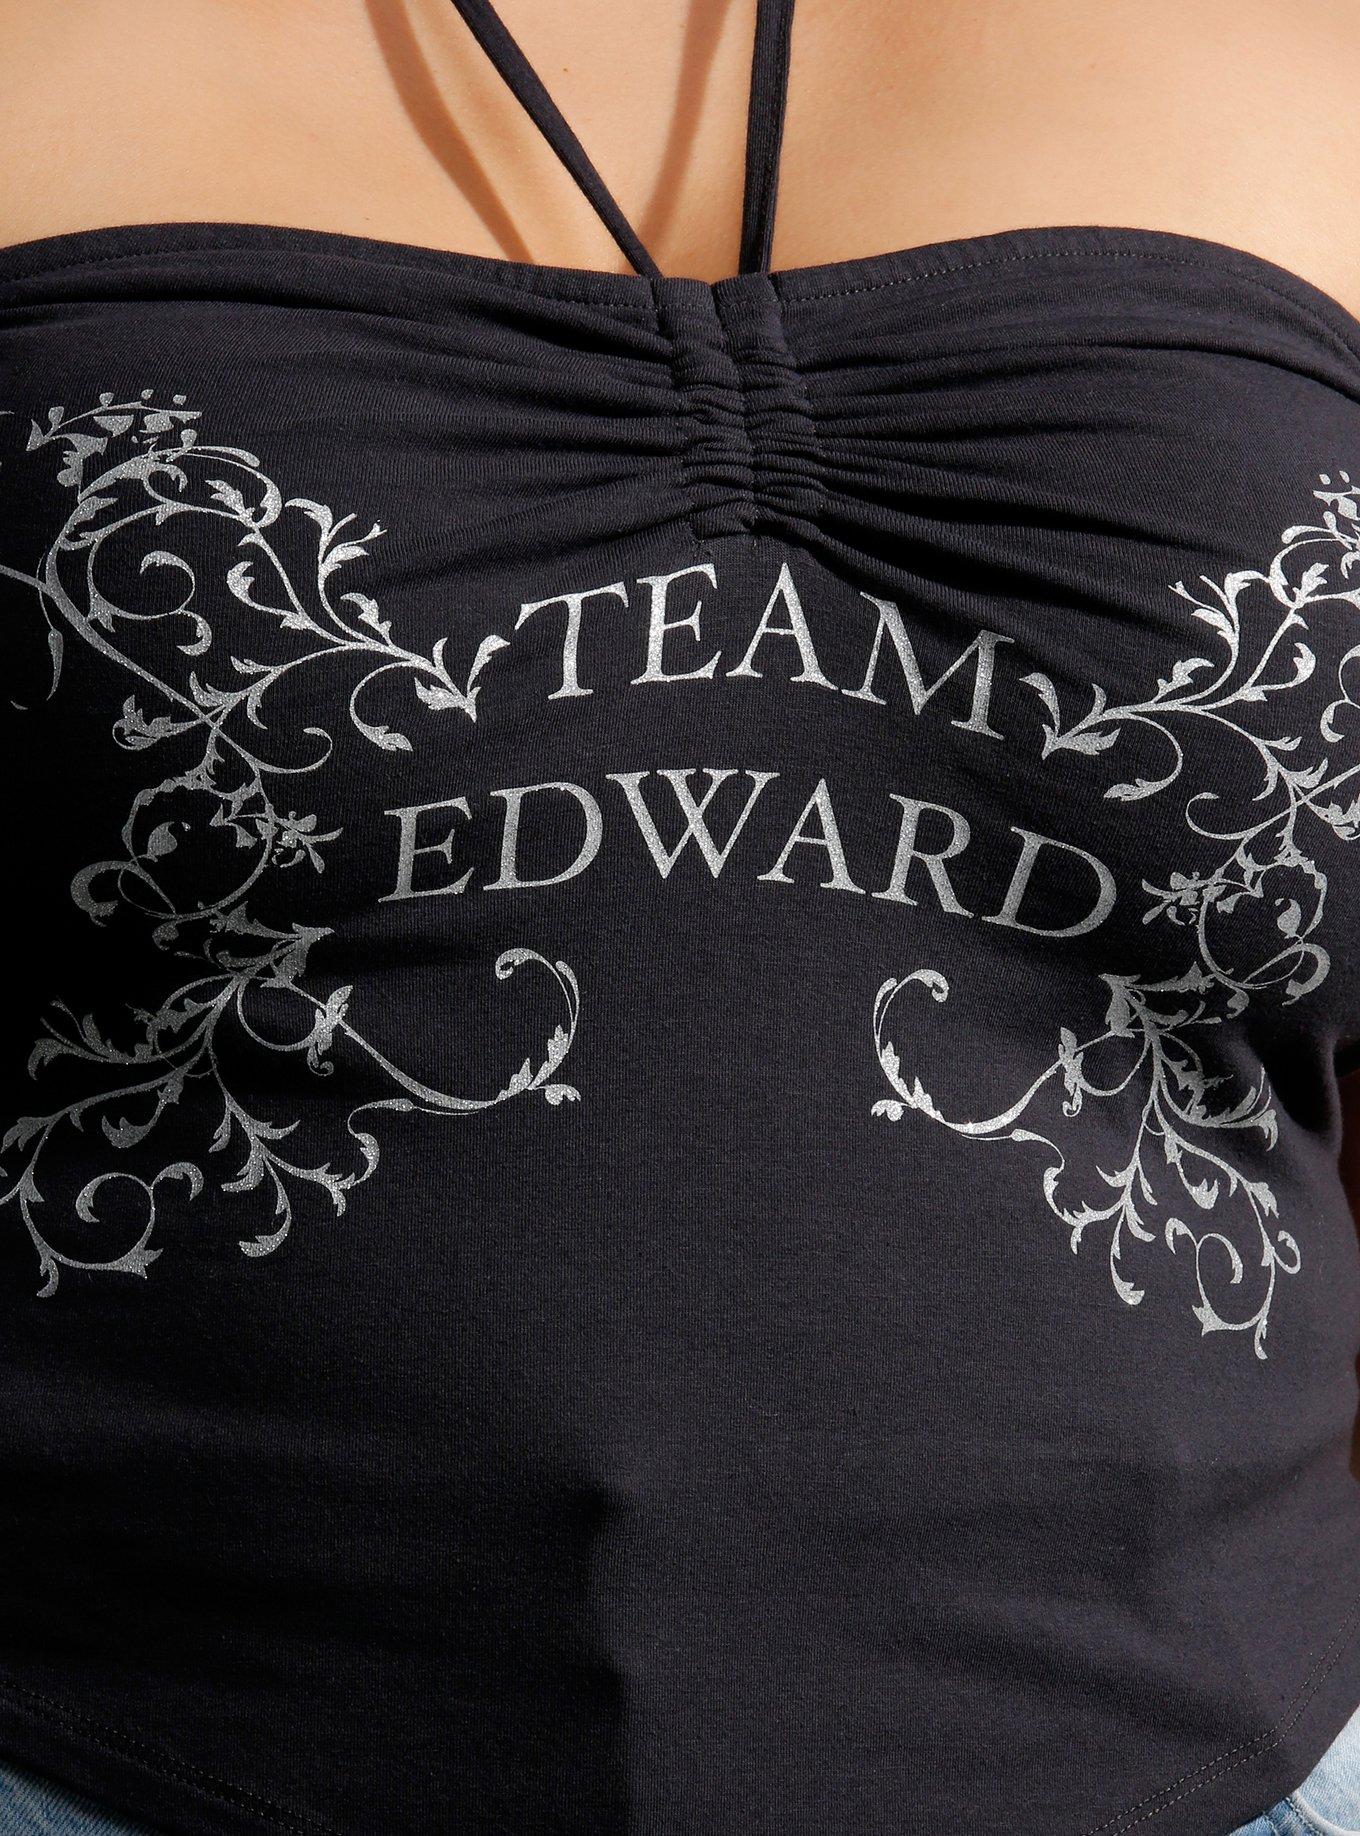 The Twilight Saga Team Edward Girls Halter Top Plus